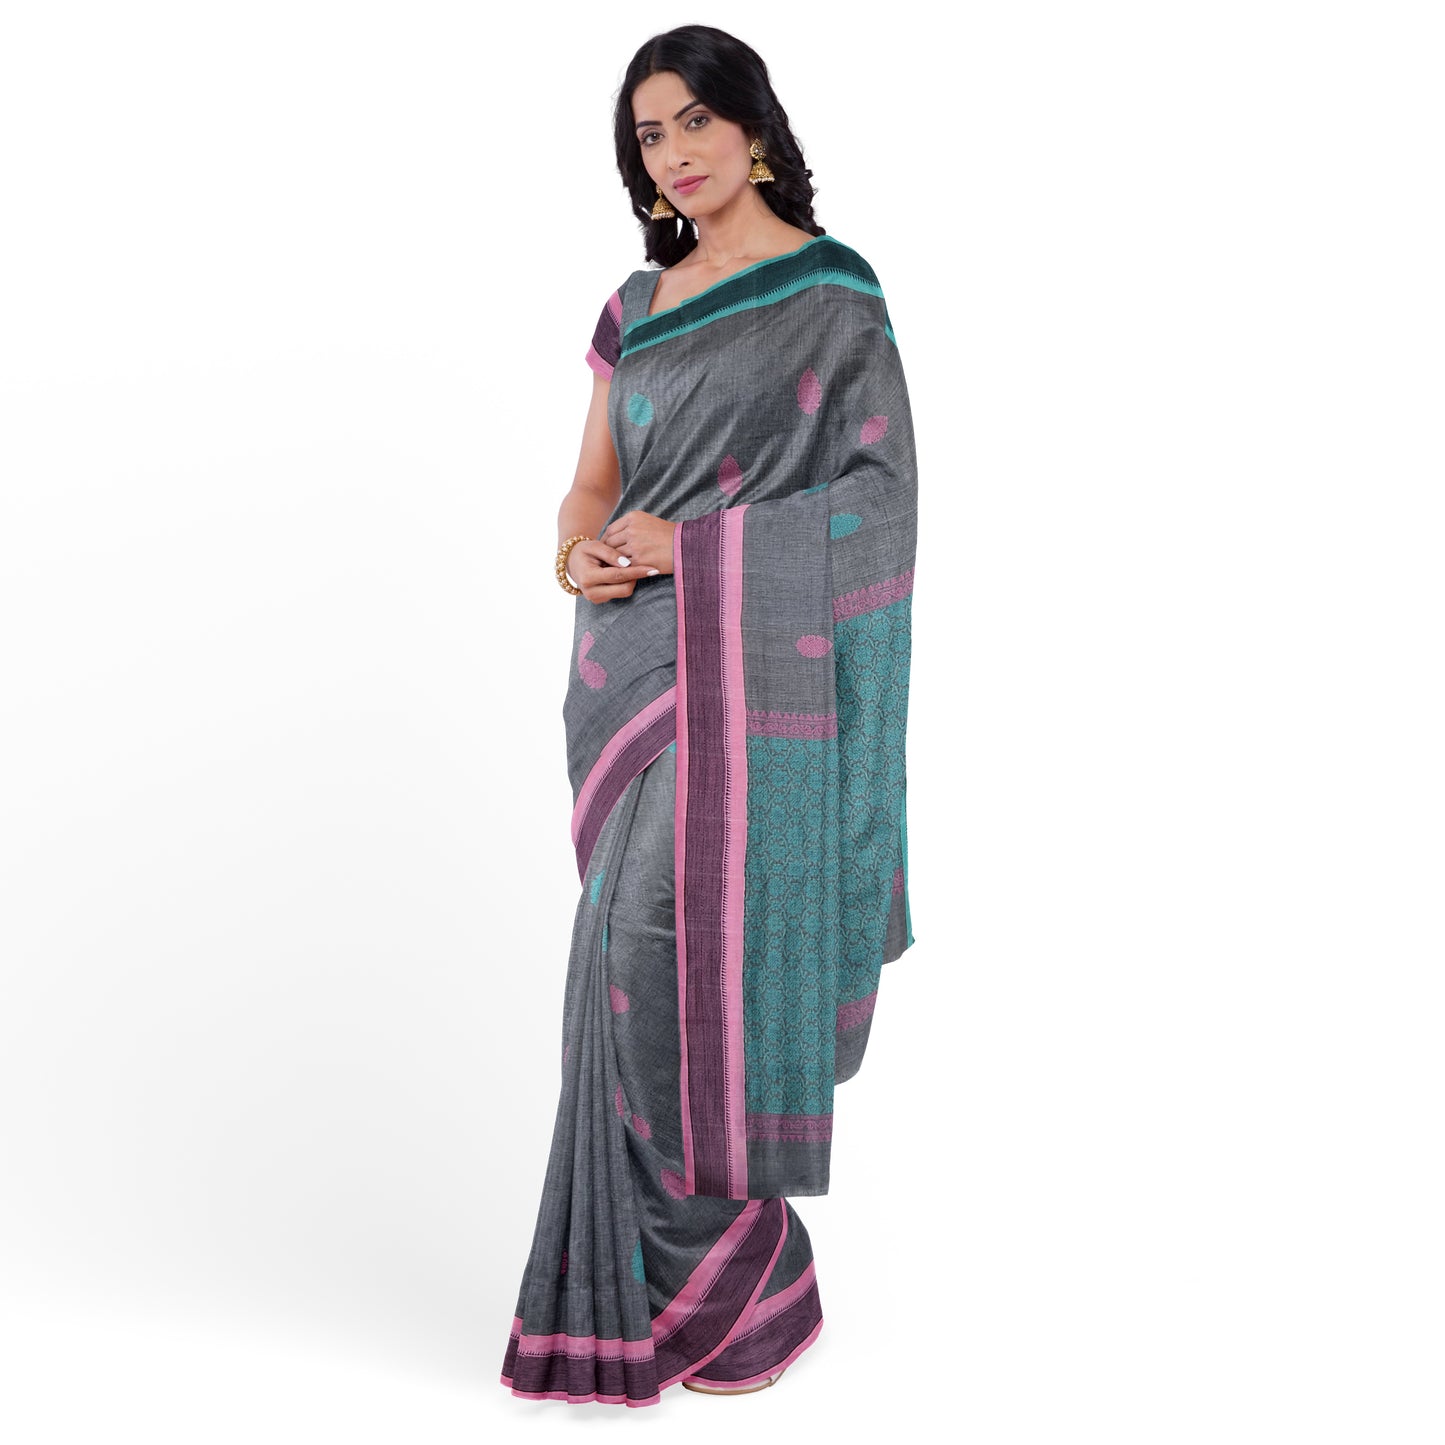 Antara - Grey body with Pink and Sea Green Buta and Pallu Pure Cotton Handloom Saree